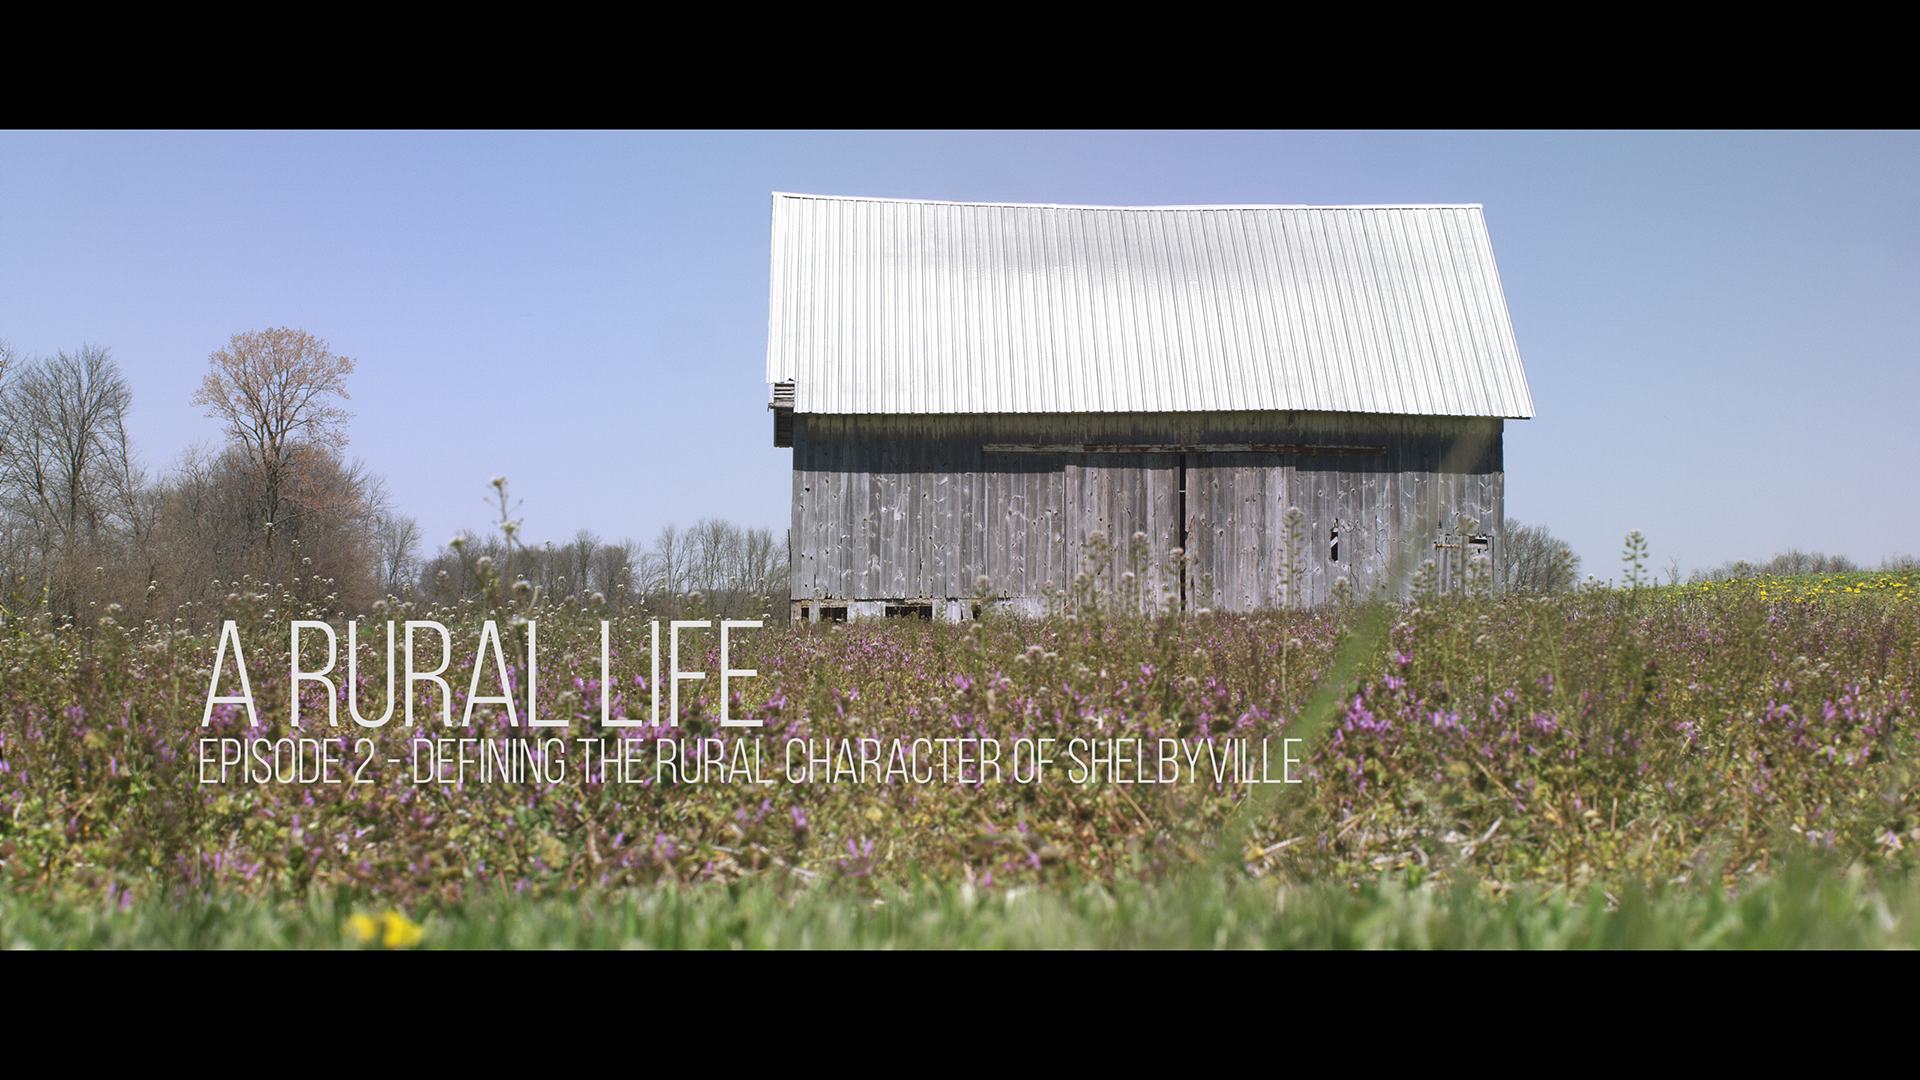 A Rural Life Episode 2 Poster 1080.jpg